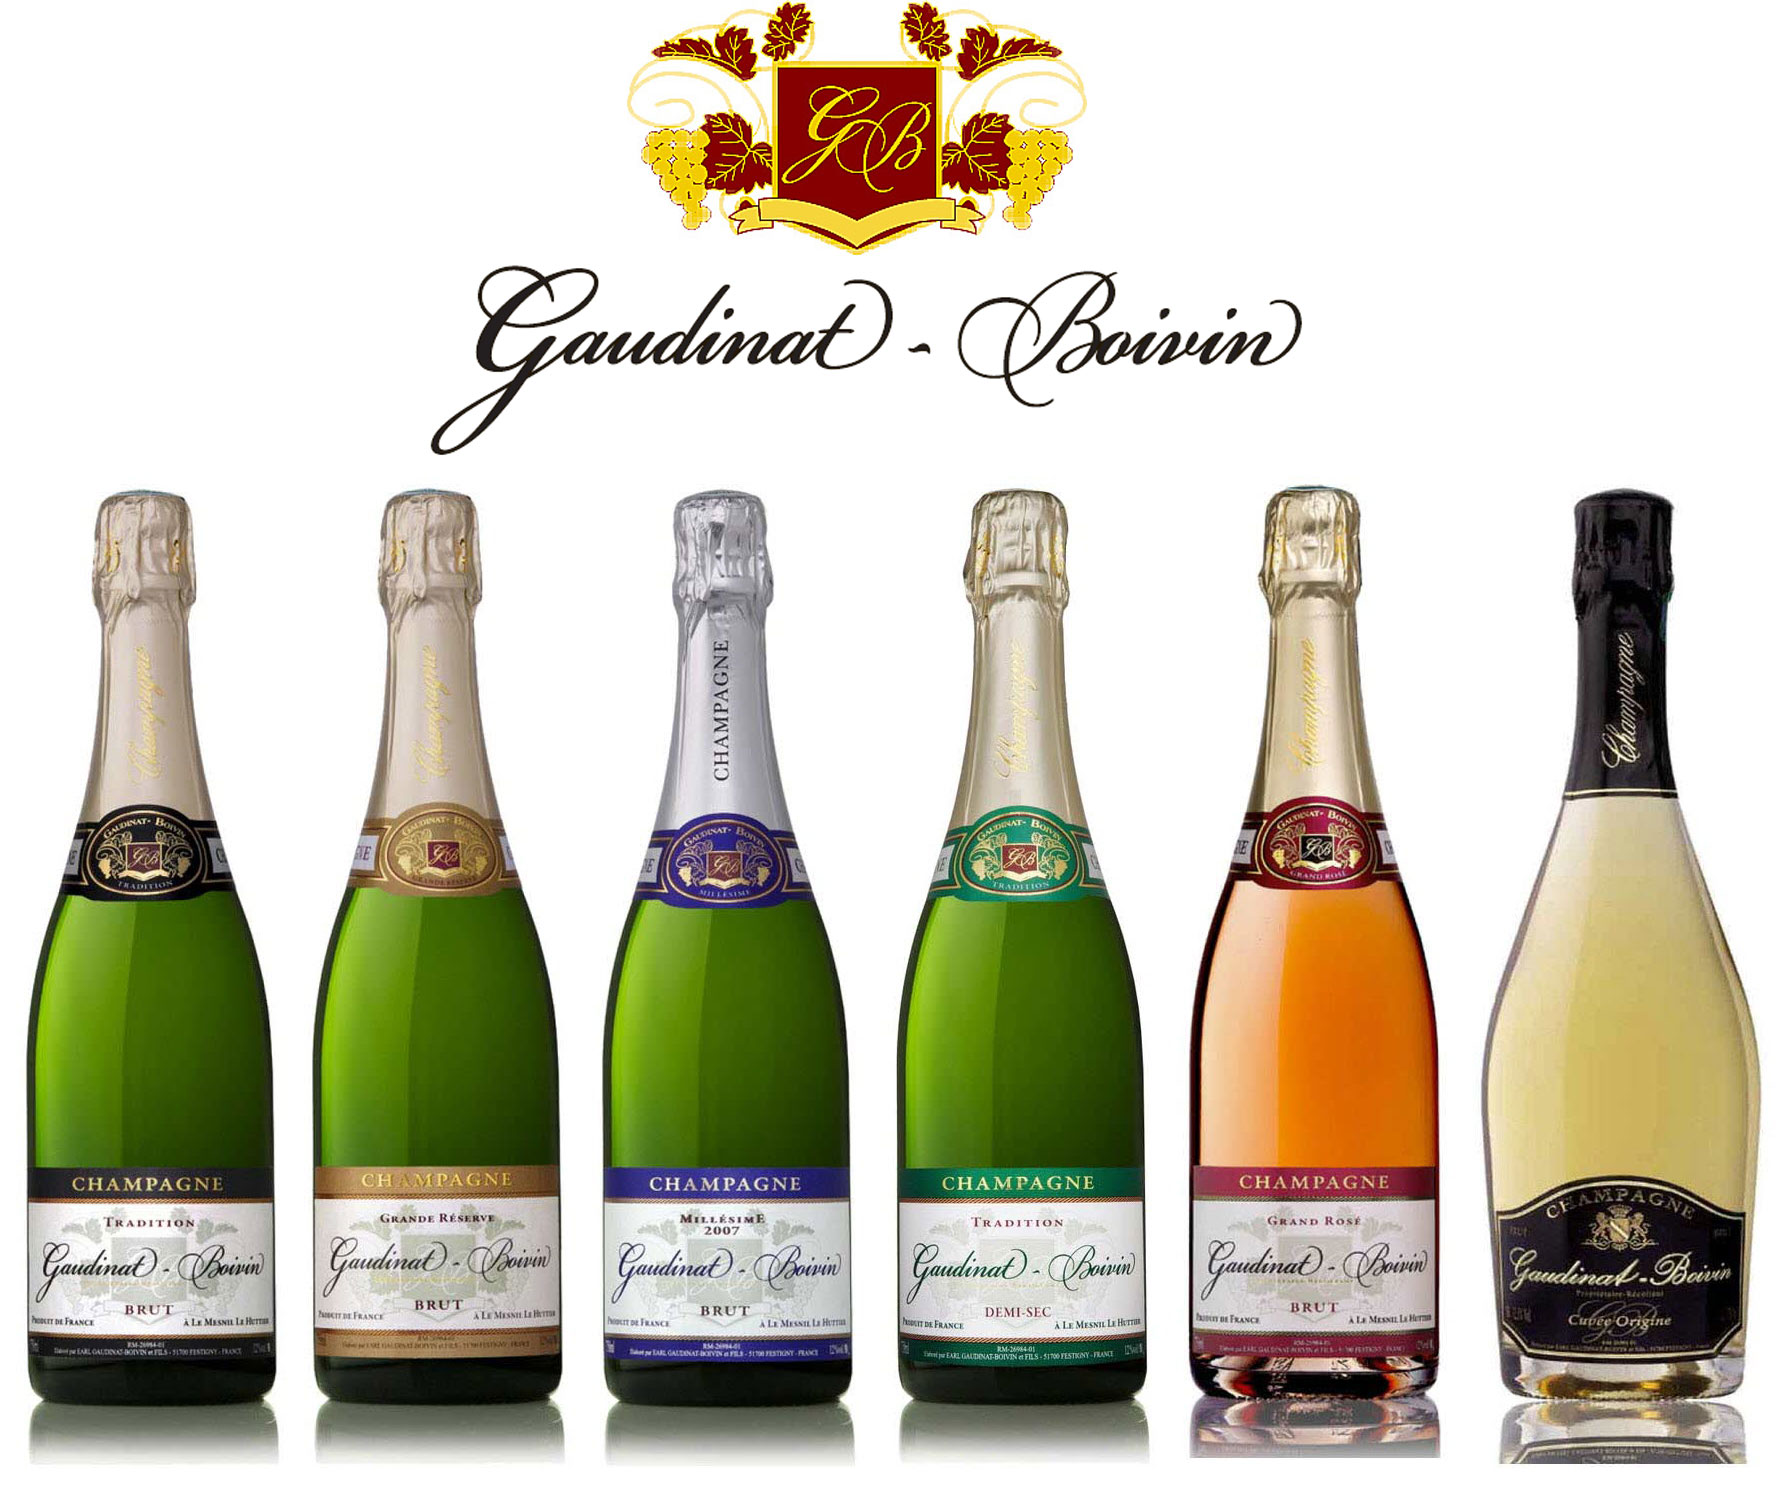 Champagne Gaudinat-Boivin